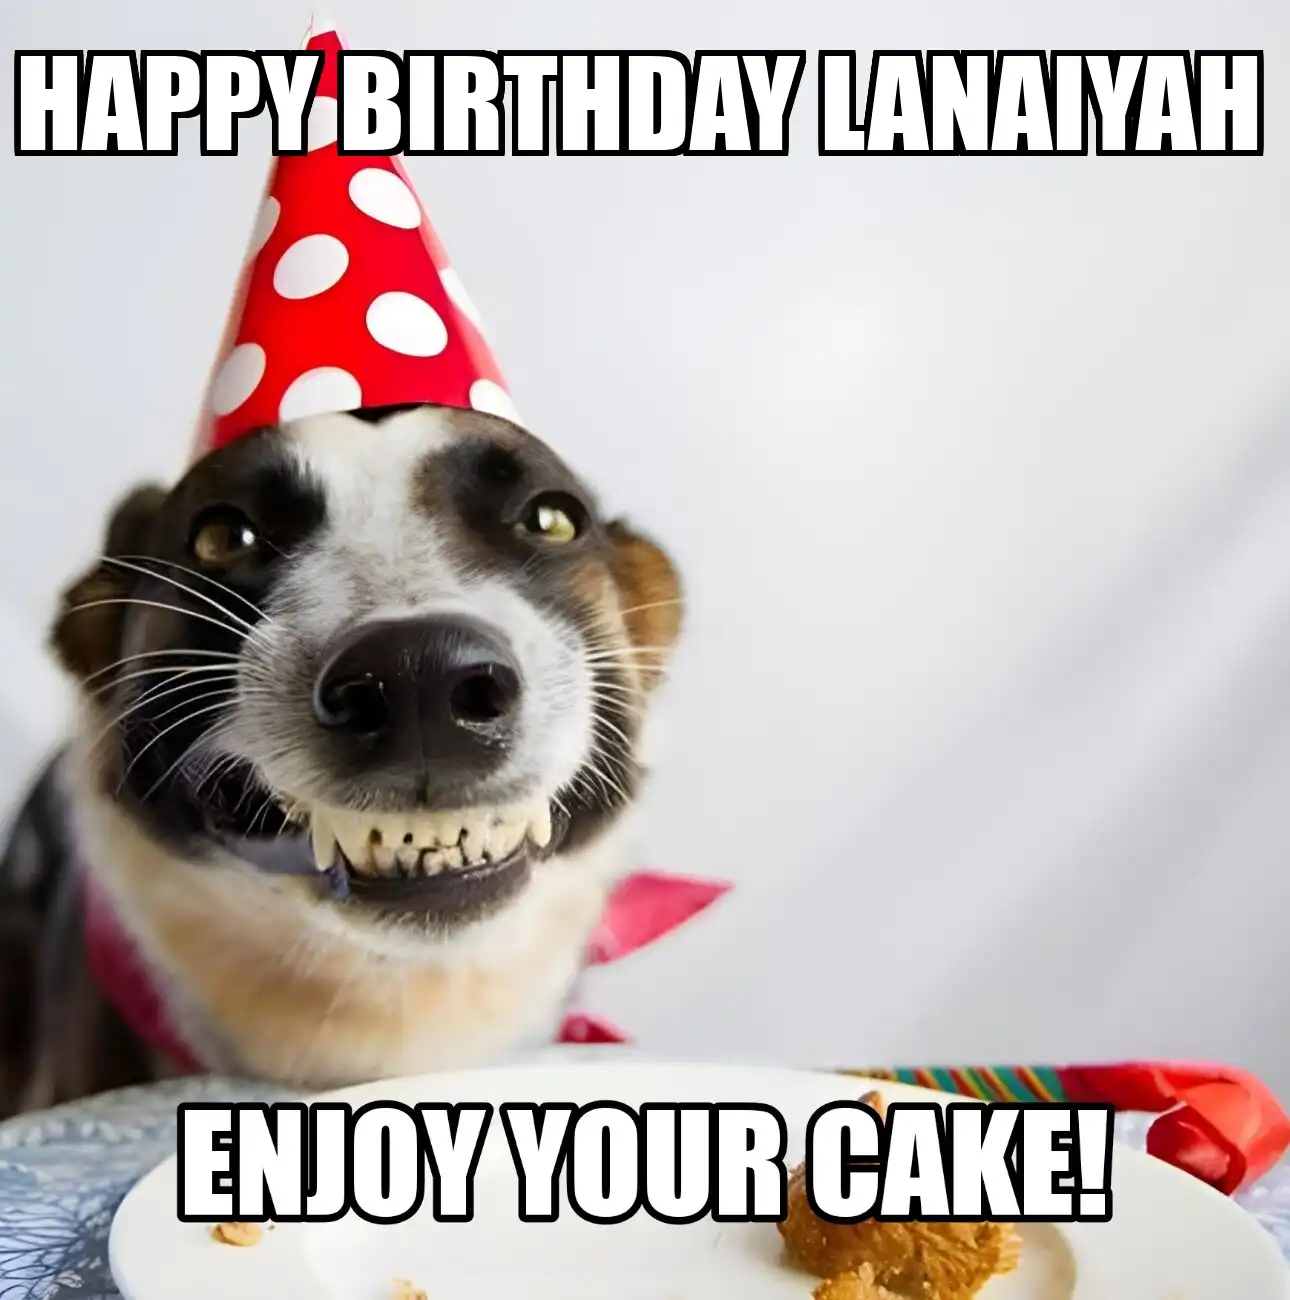 Happy Birthday Lanaiyah Enjoy Your Cake Dog Meme